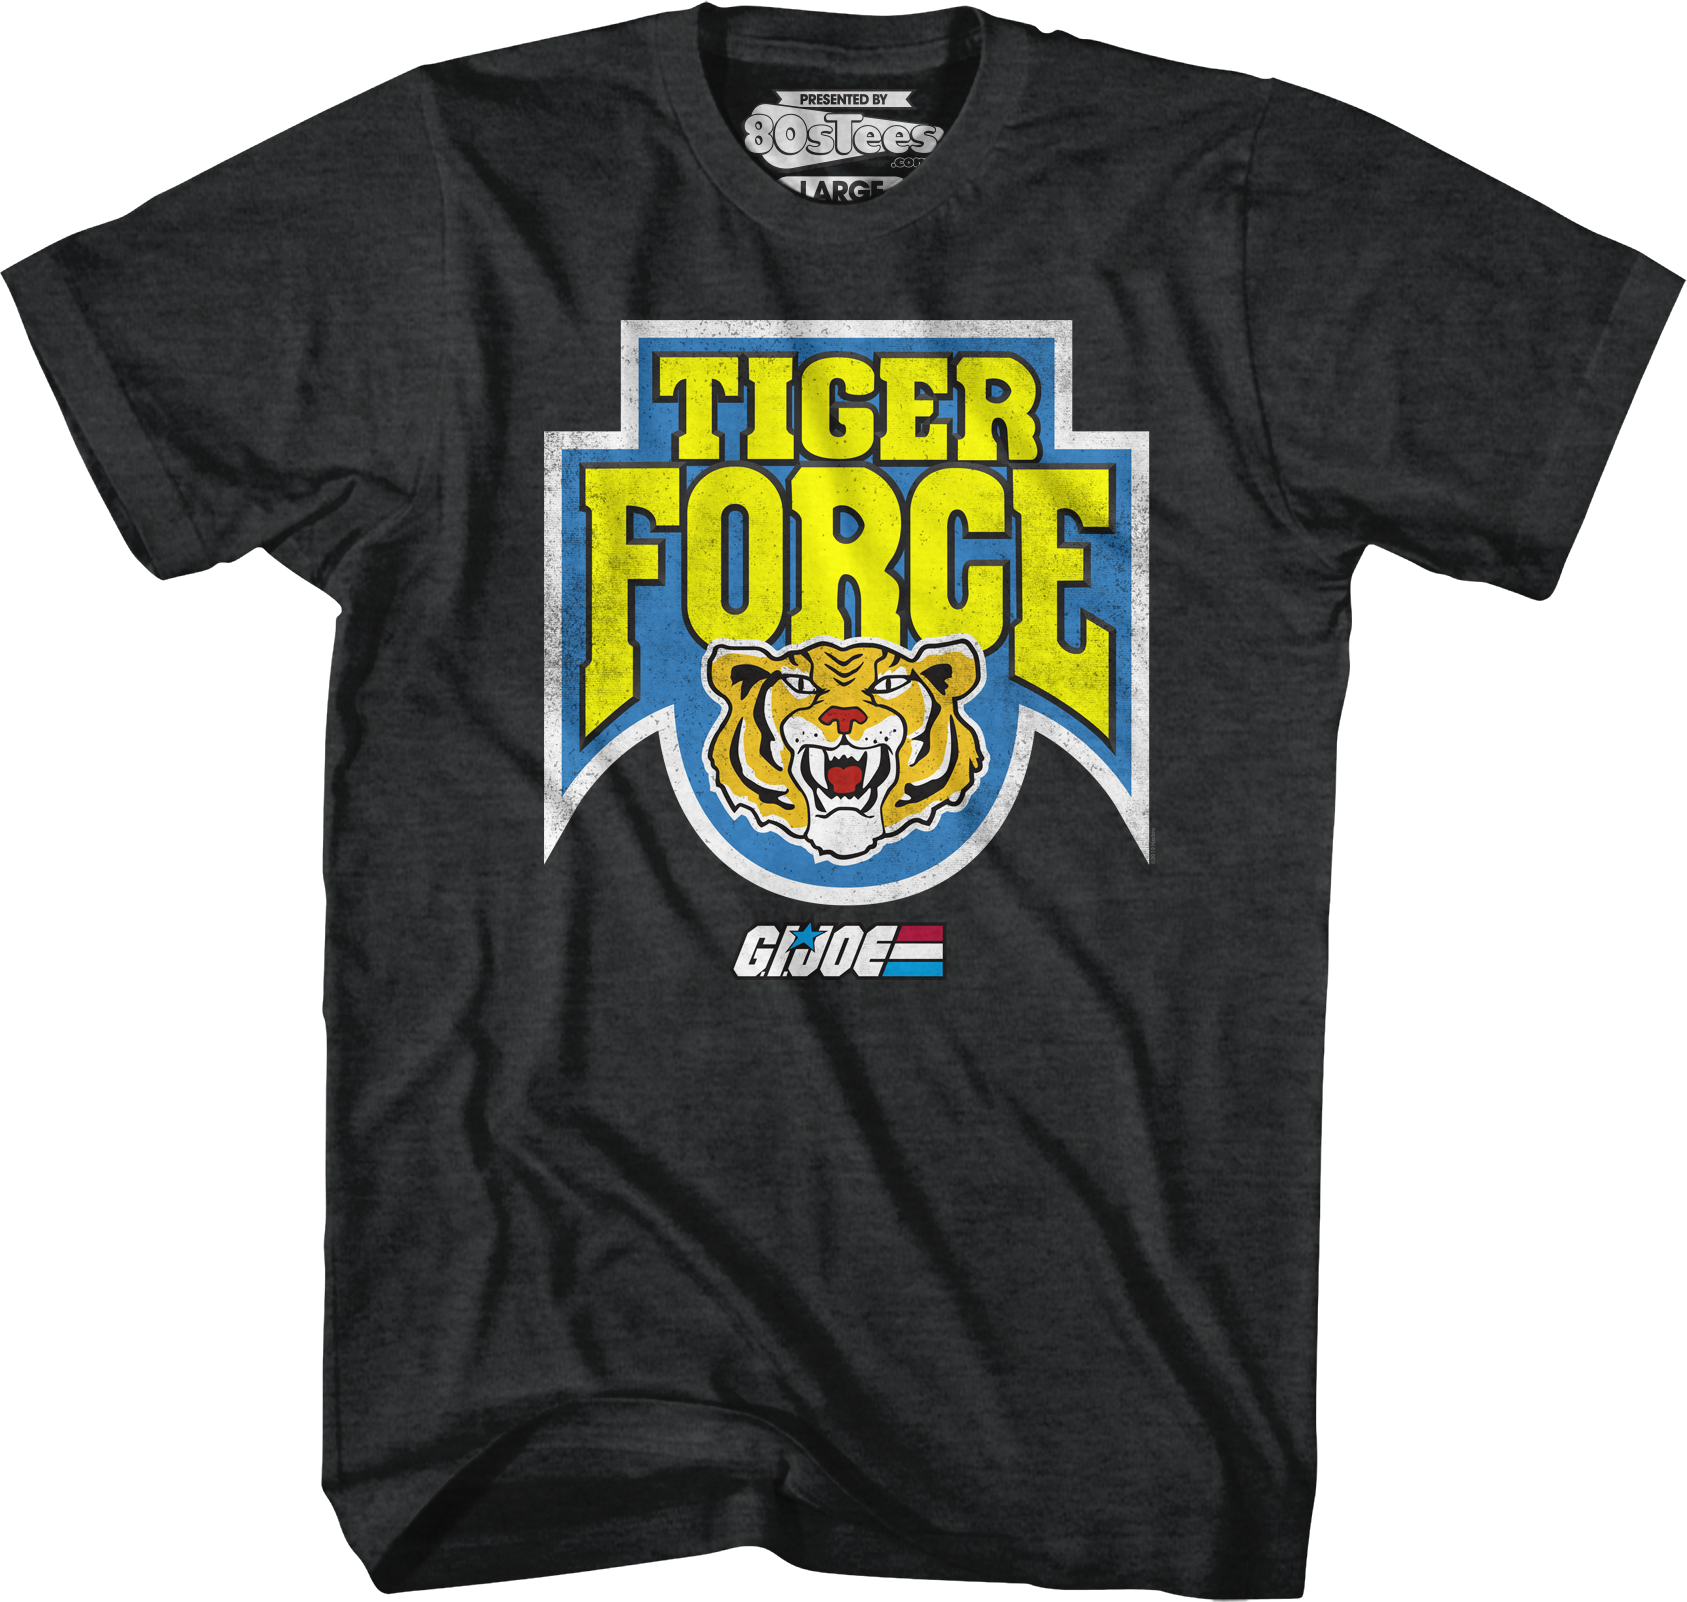 tiger force t shirt